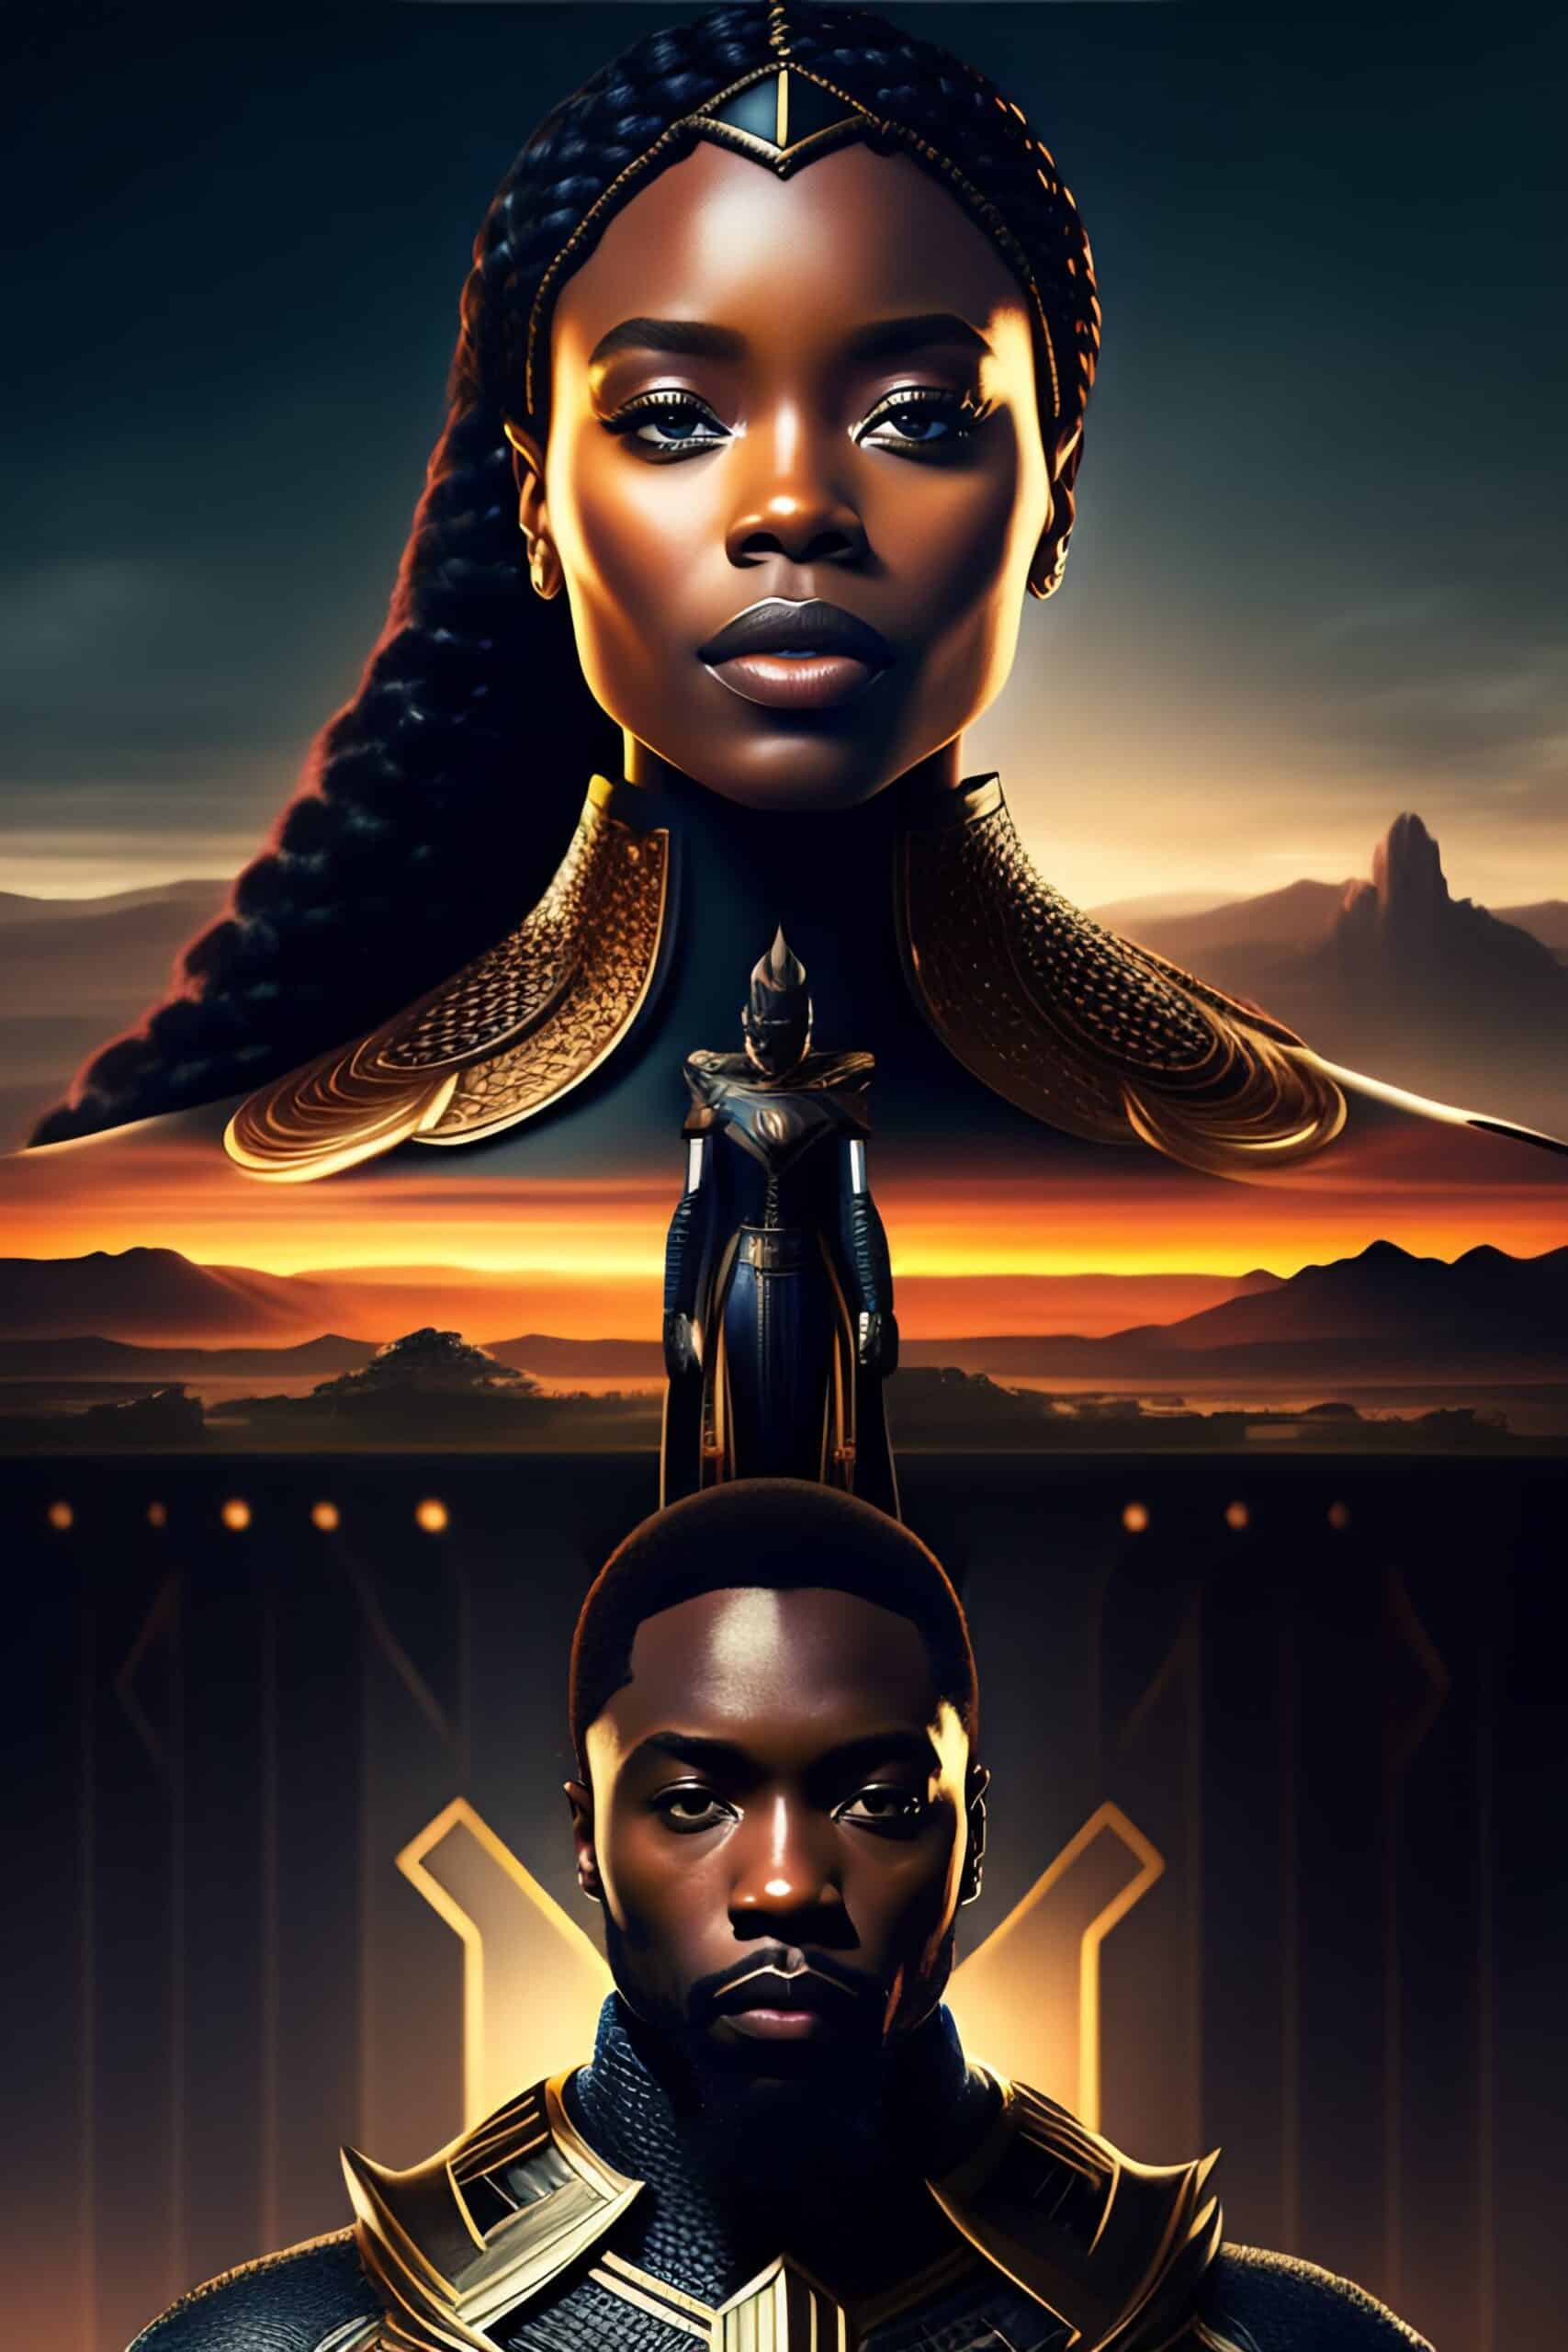 Kreyolicious in Memoriam | Is Wakanda in Marvel's Black Panther Film A Metaphor For Haiti?